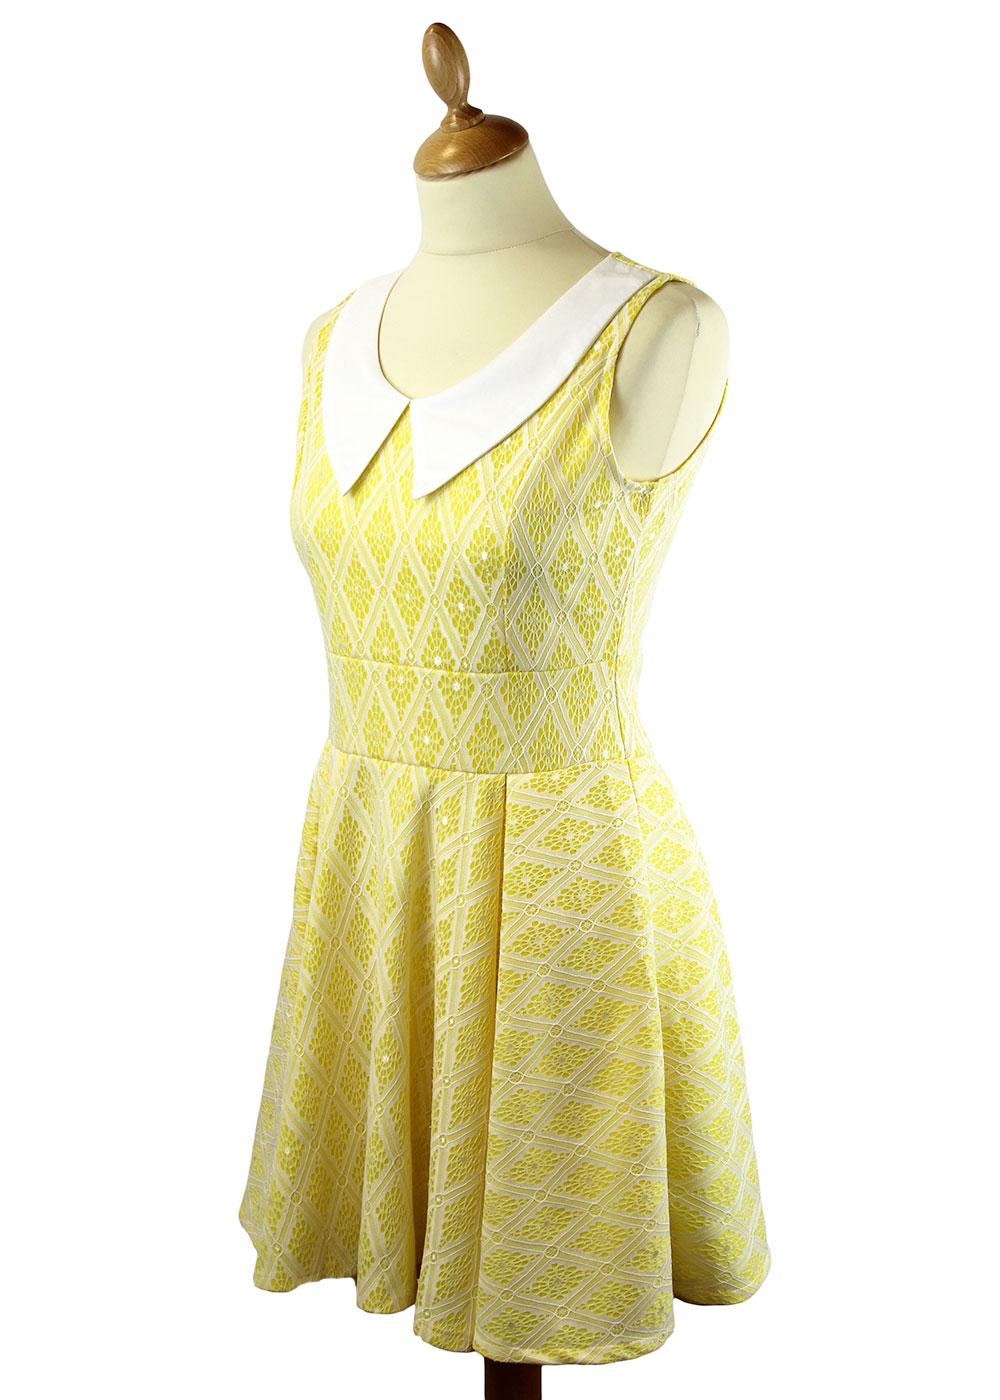 LOVESTRUCK Kimberly Retro 60s Mod Lace Overlay Dress in Yellow